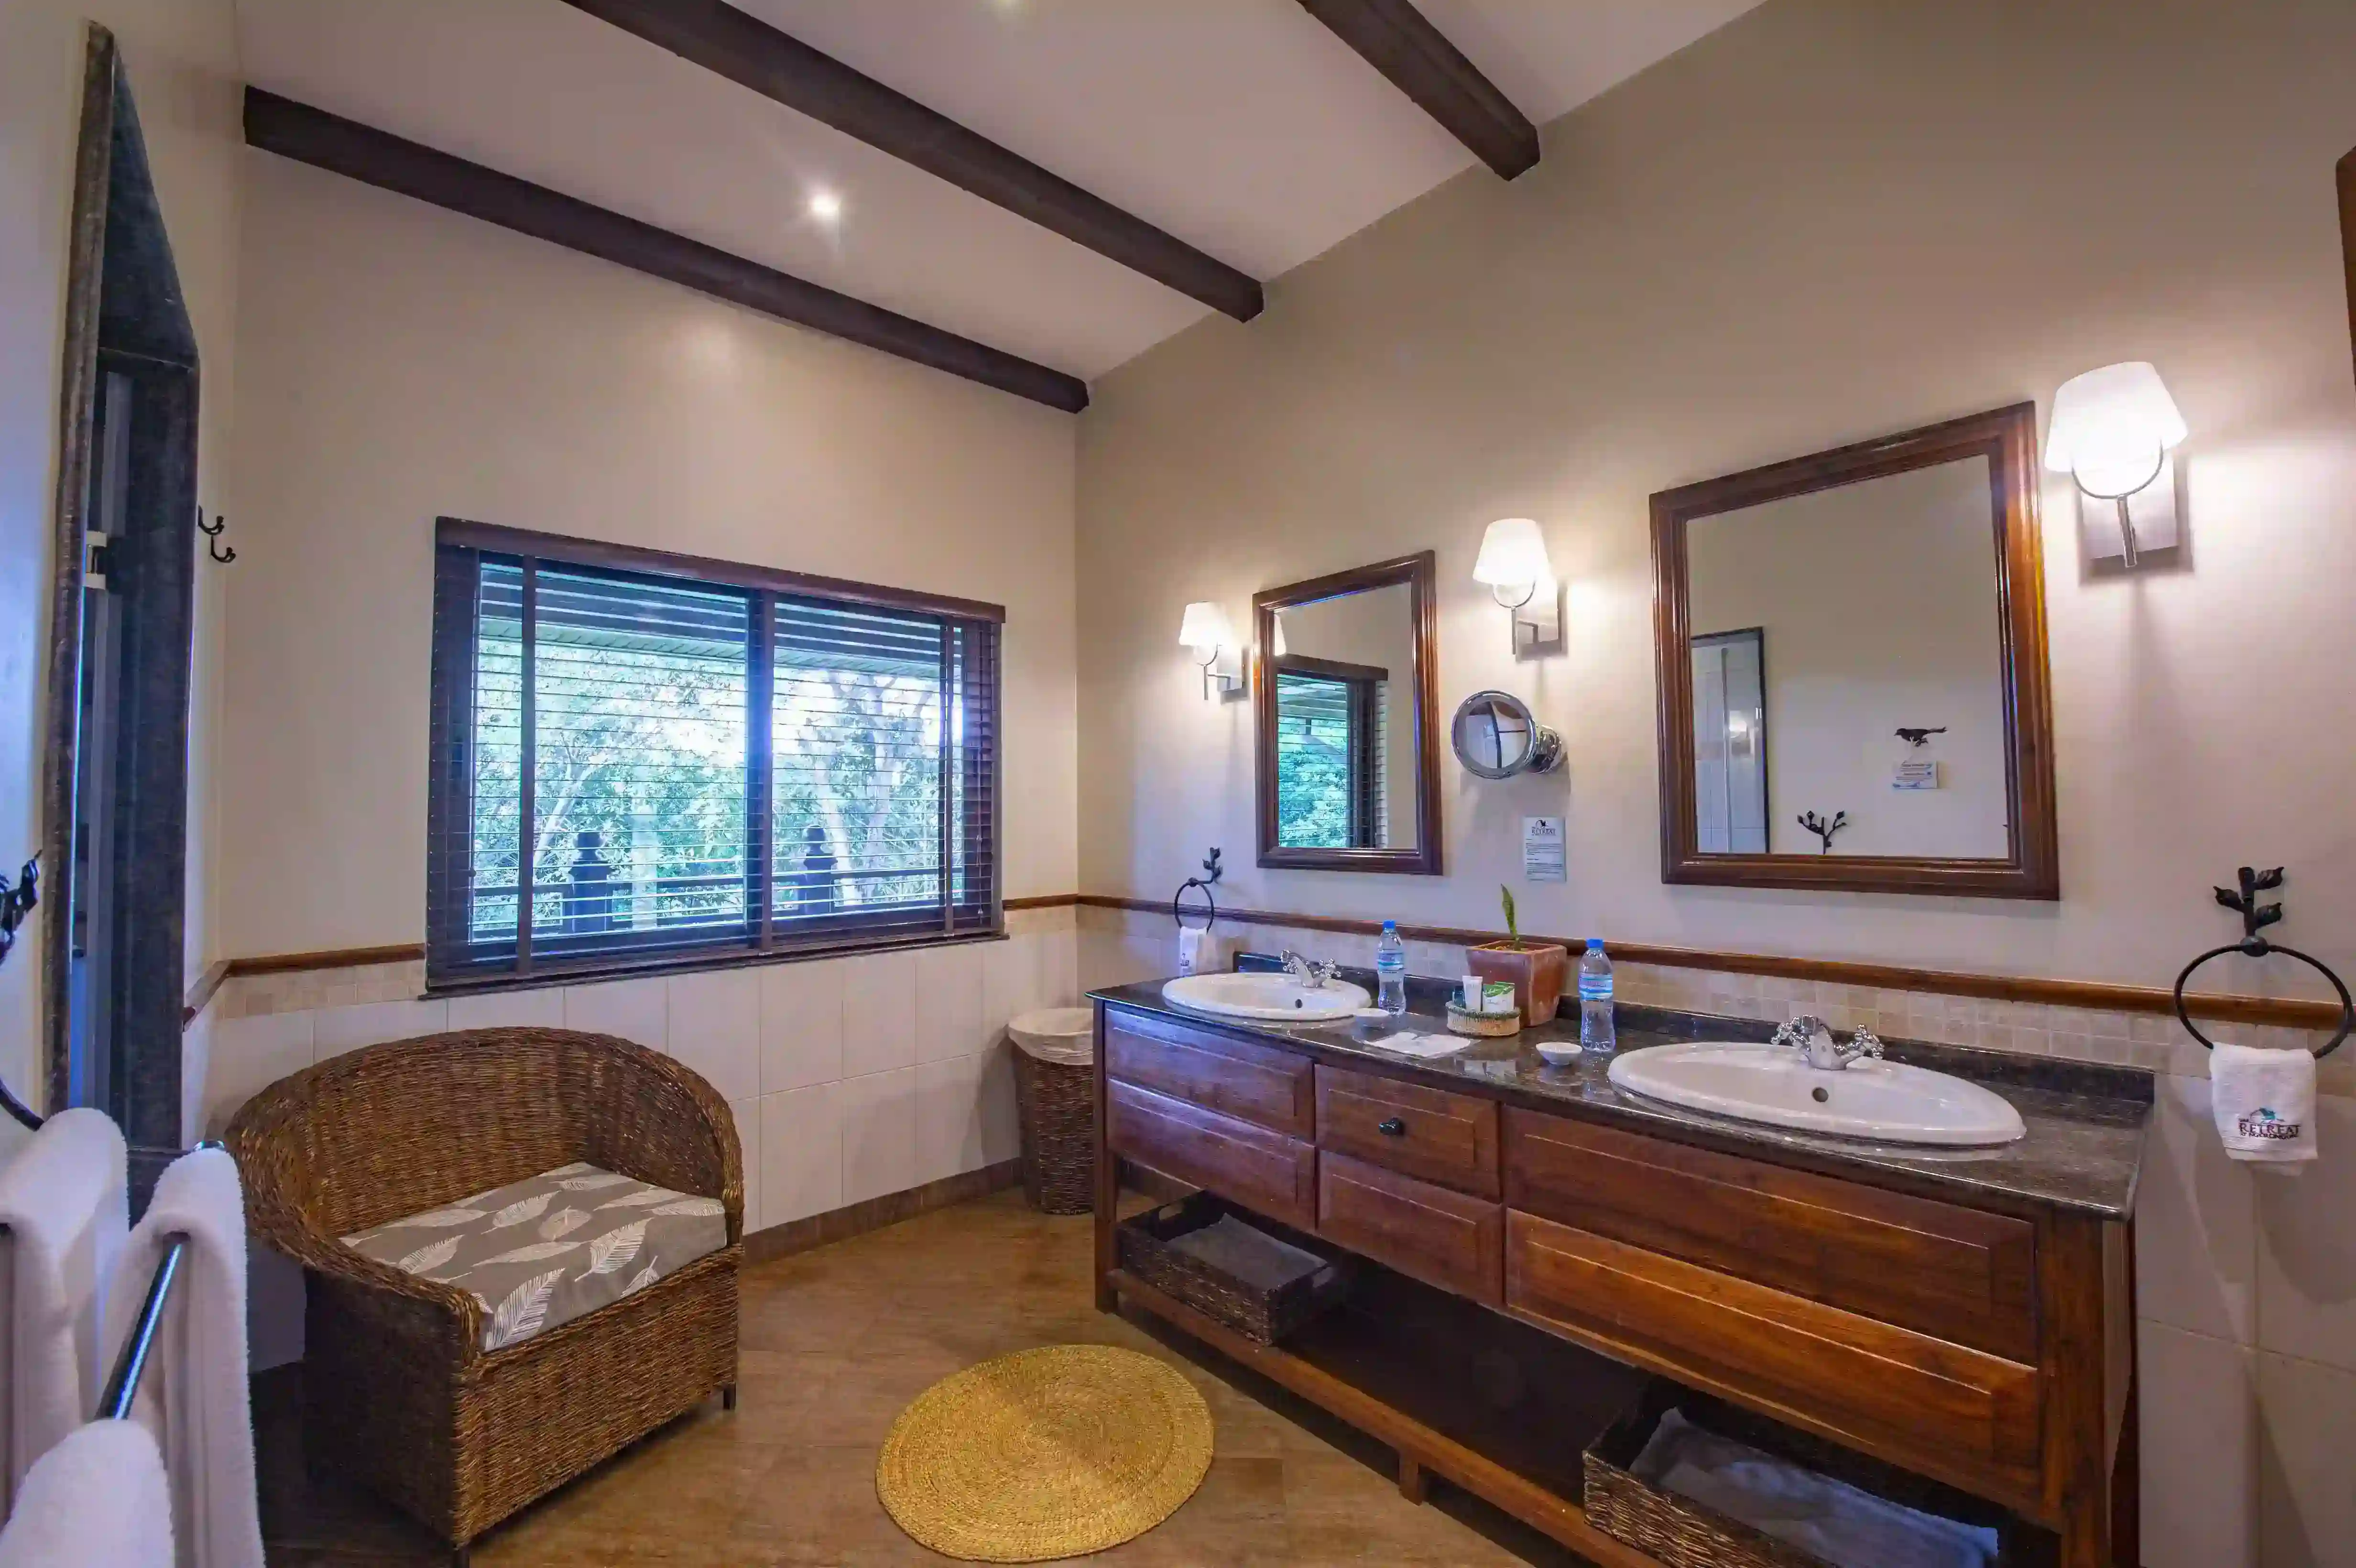 The retreat at ngorongoro bathroom